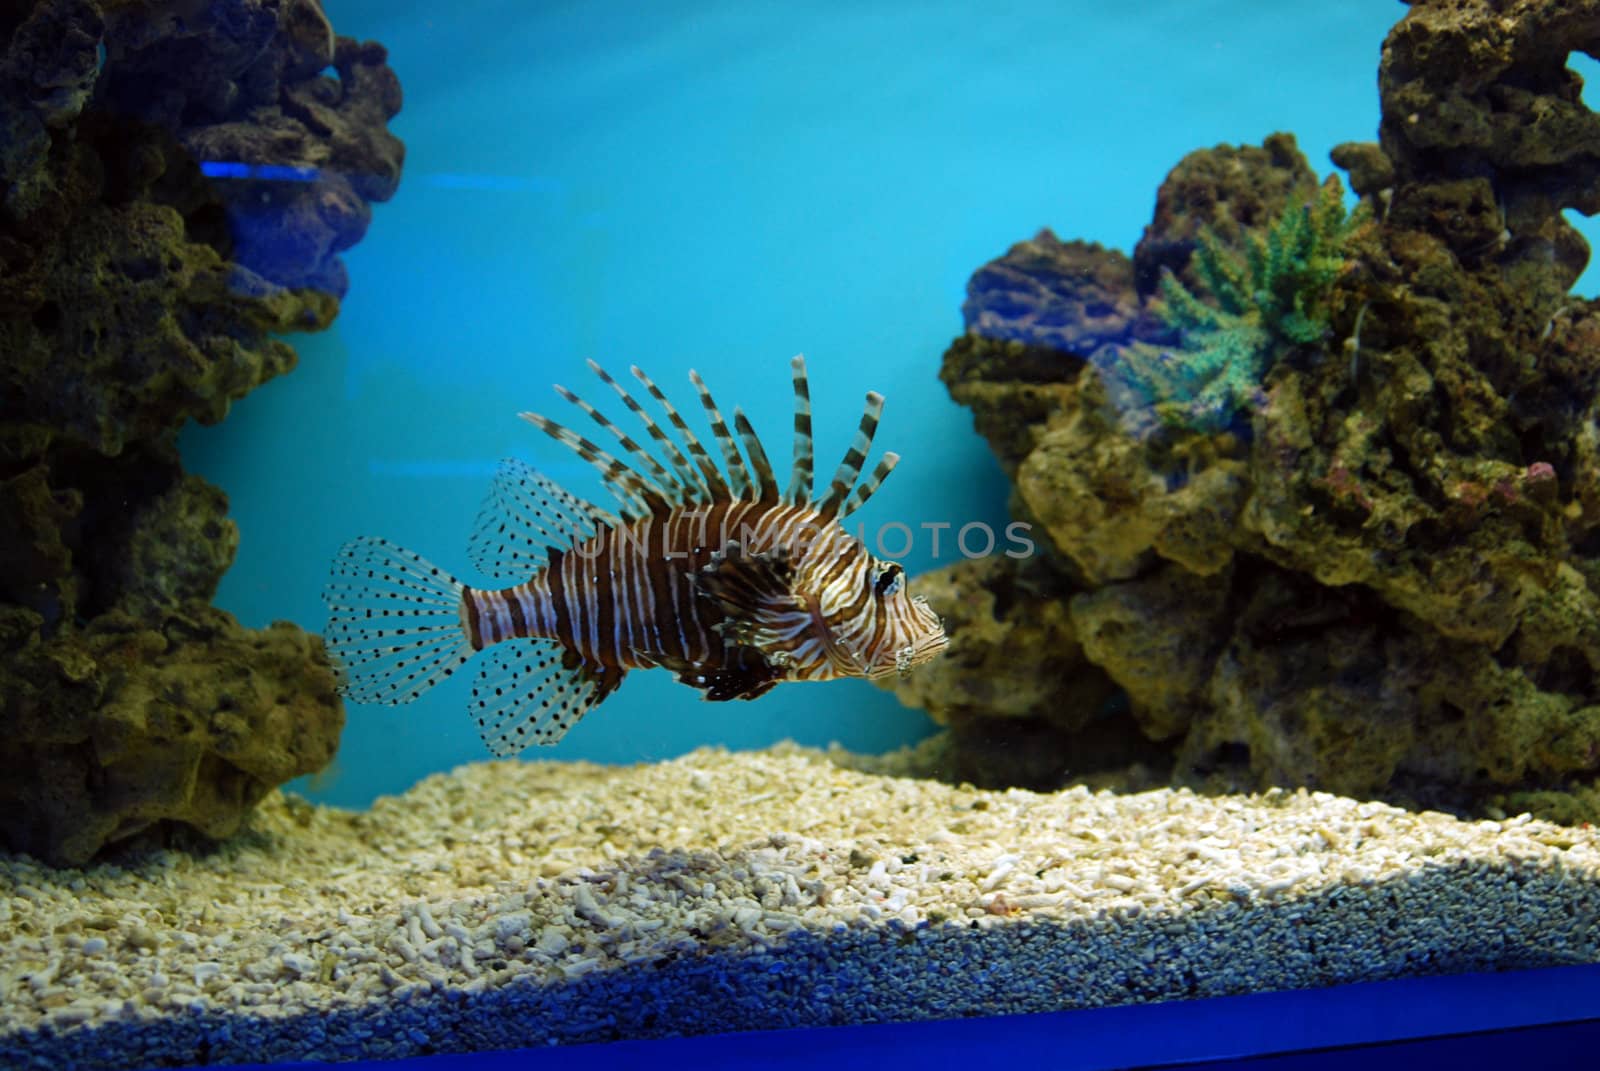 aquarium fish by prizzz